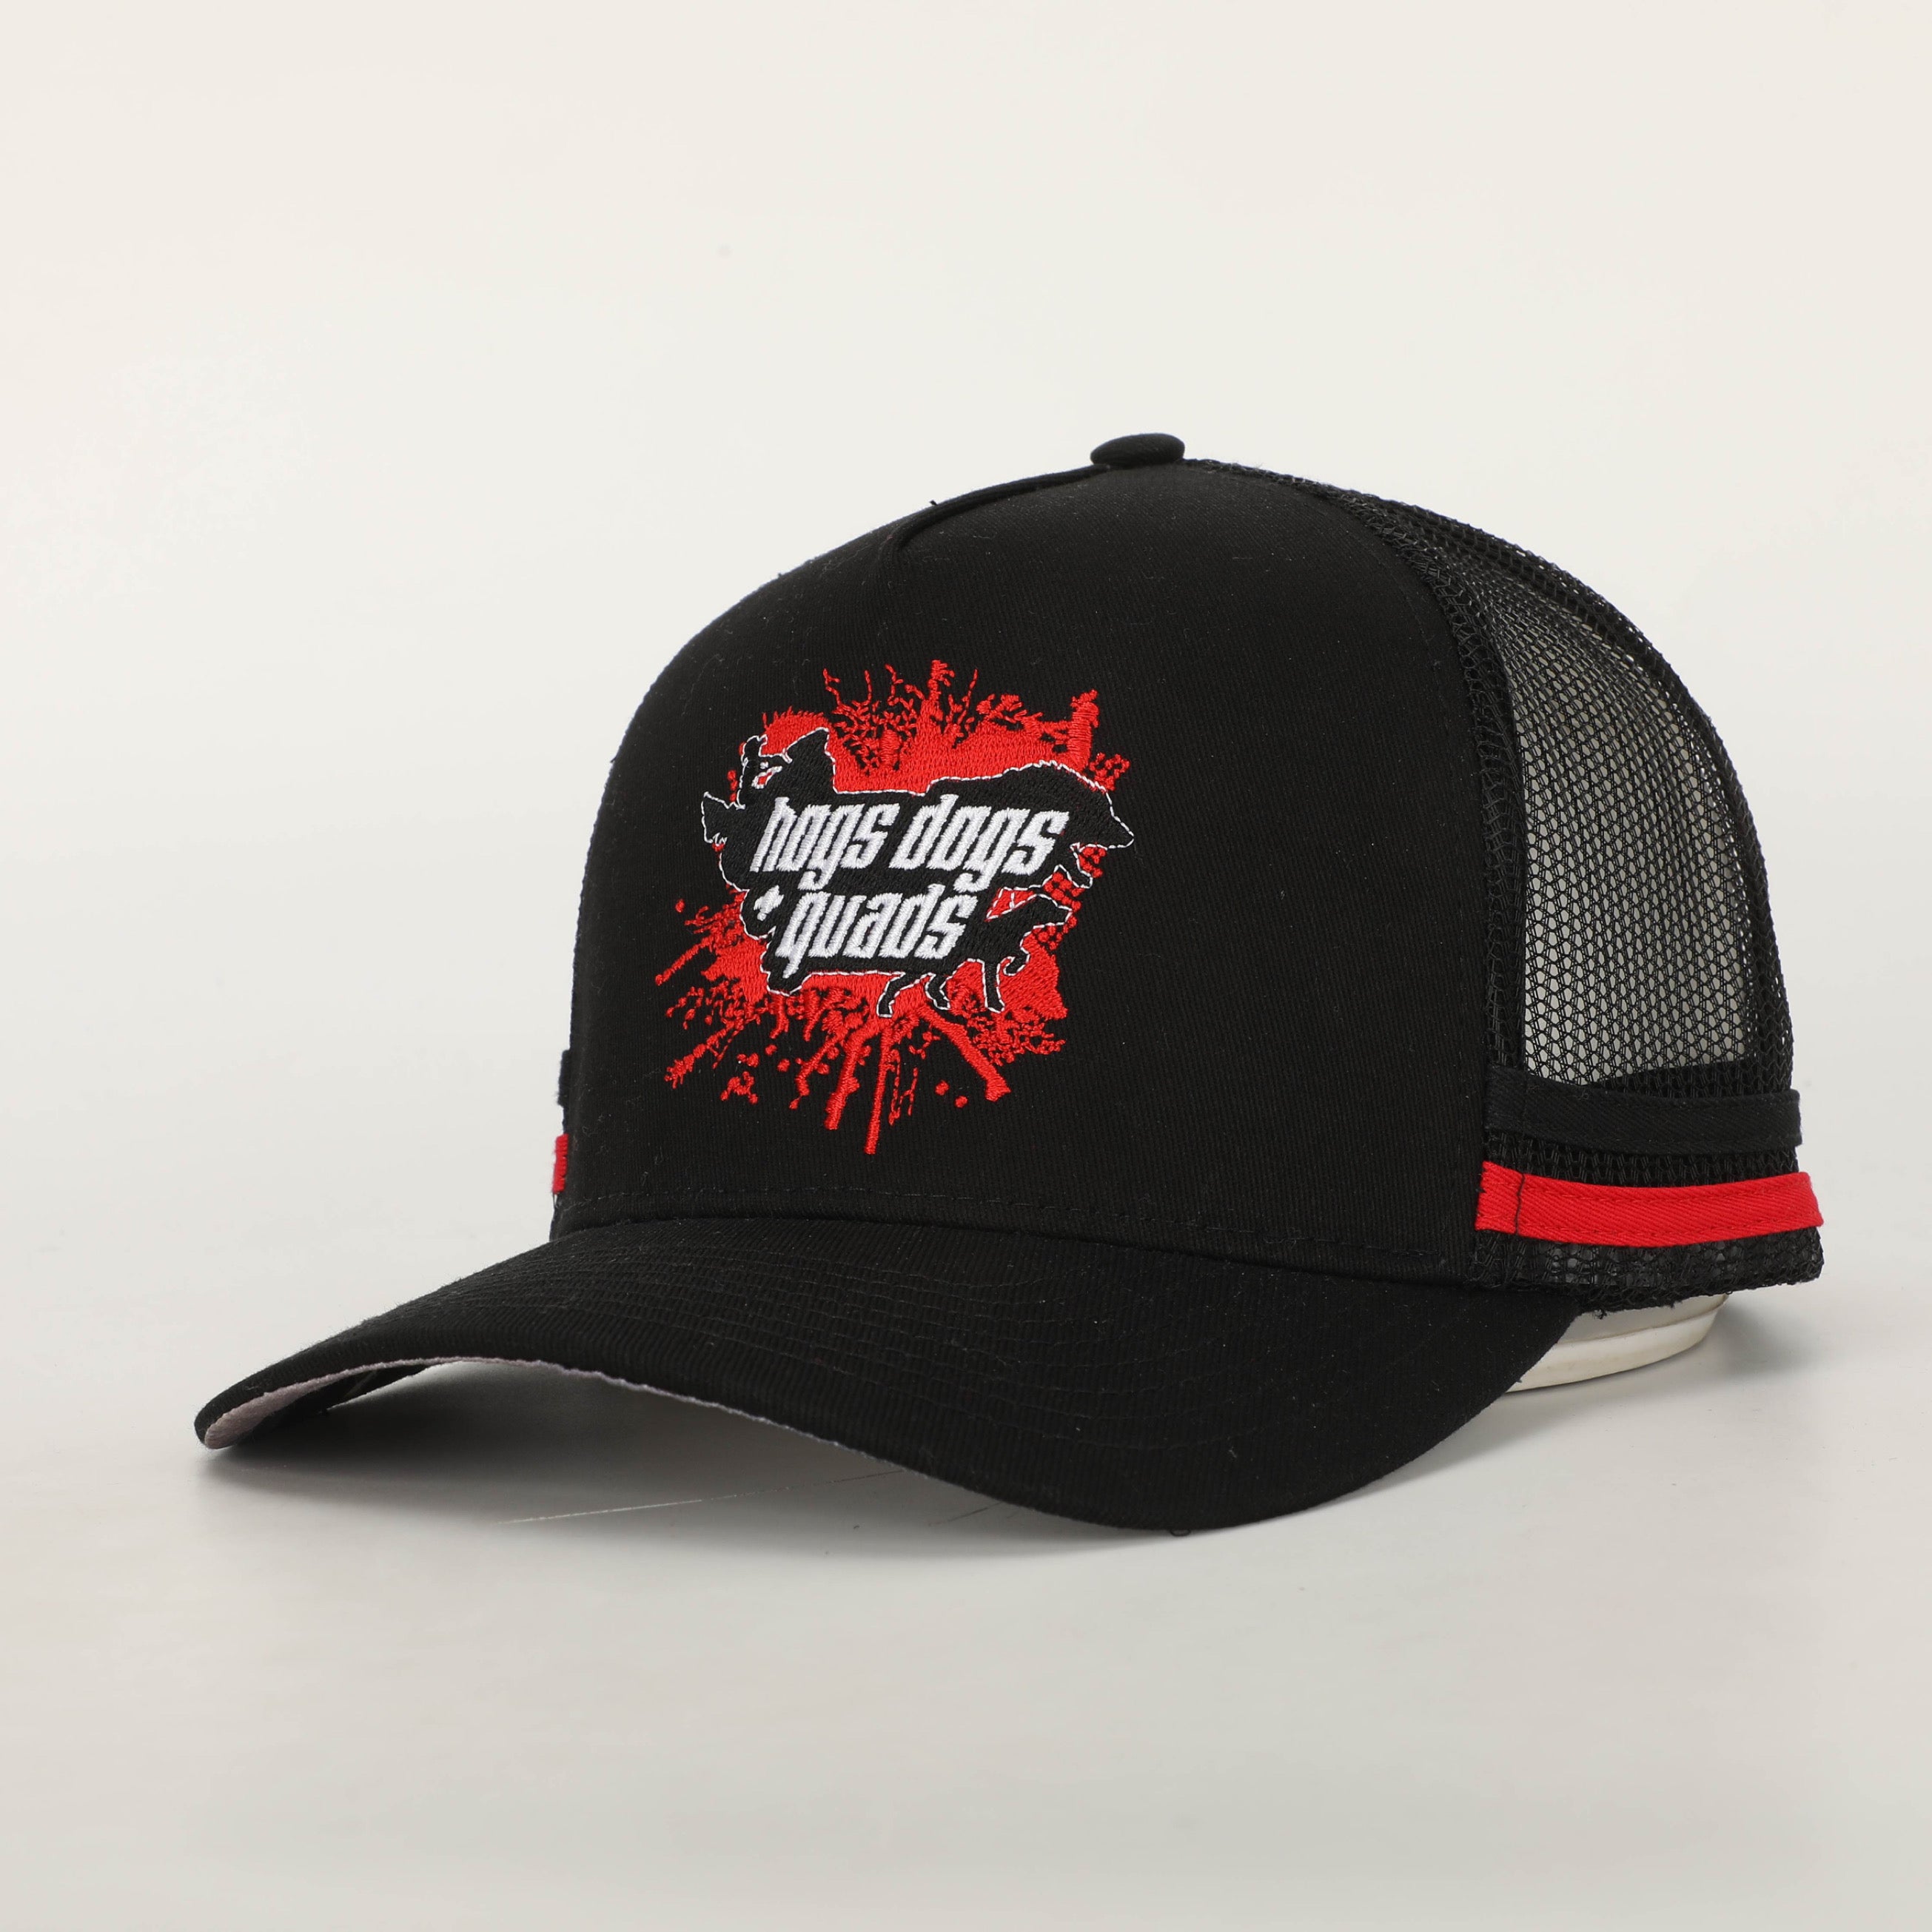 Black - Truckers Hat, Quad photo under peak - Hogs Dogs Quads Shop